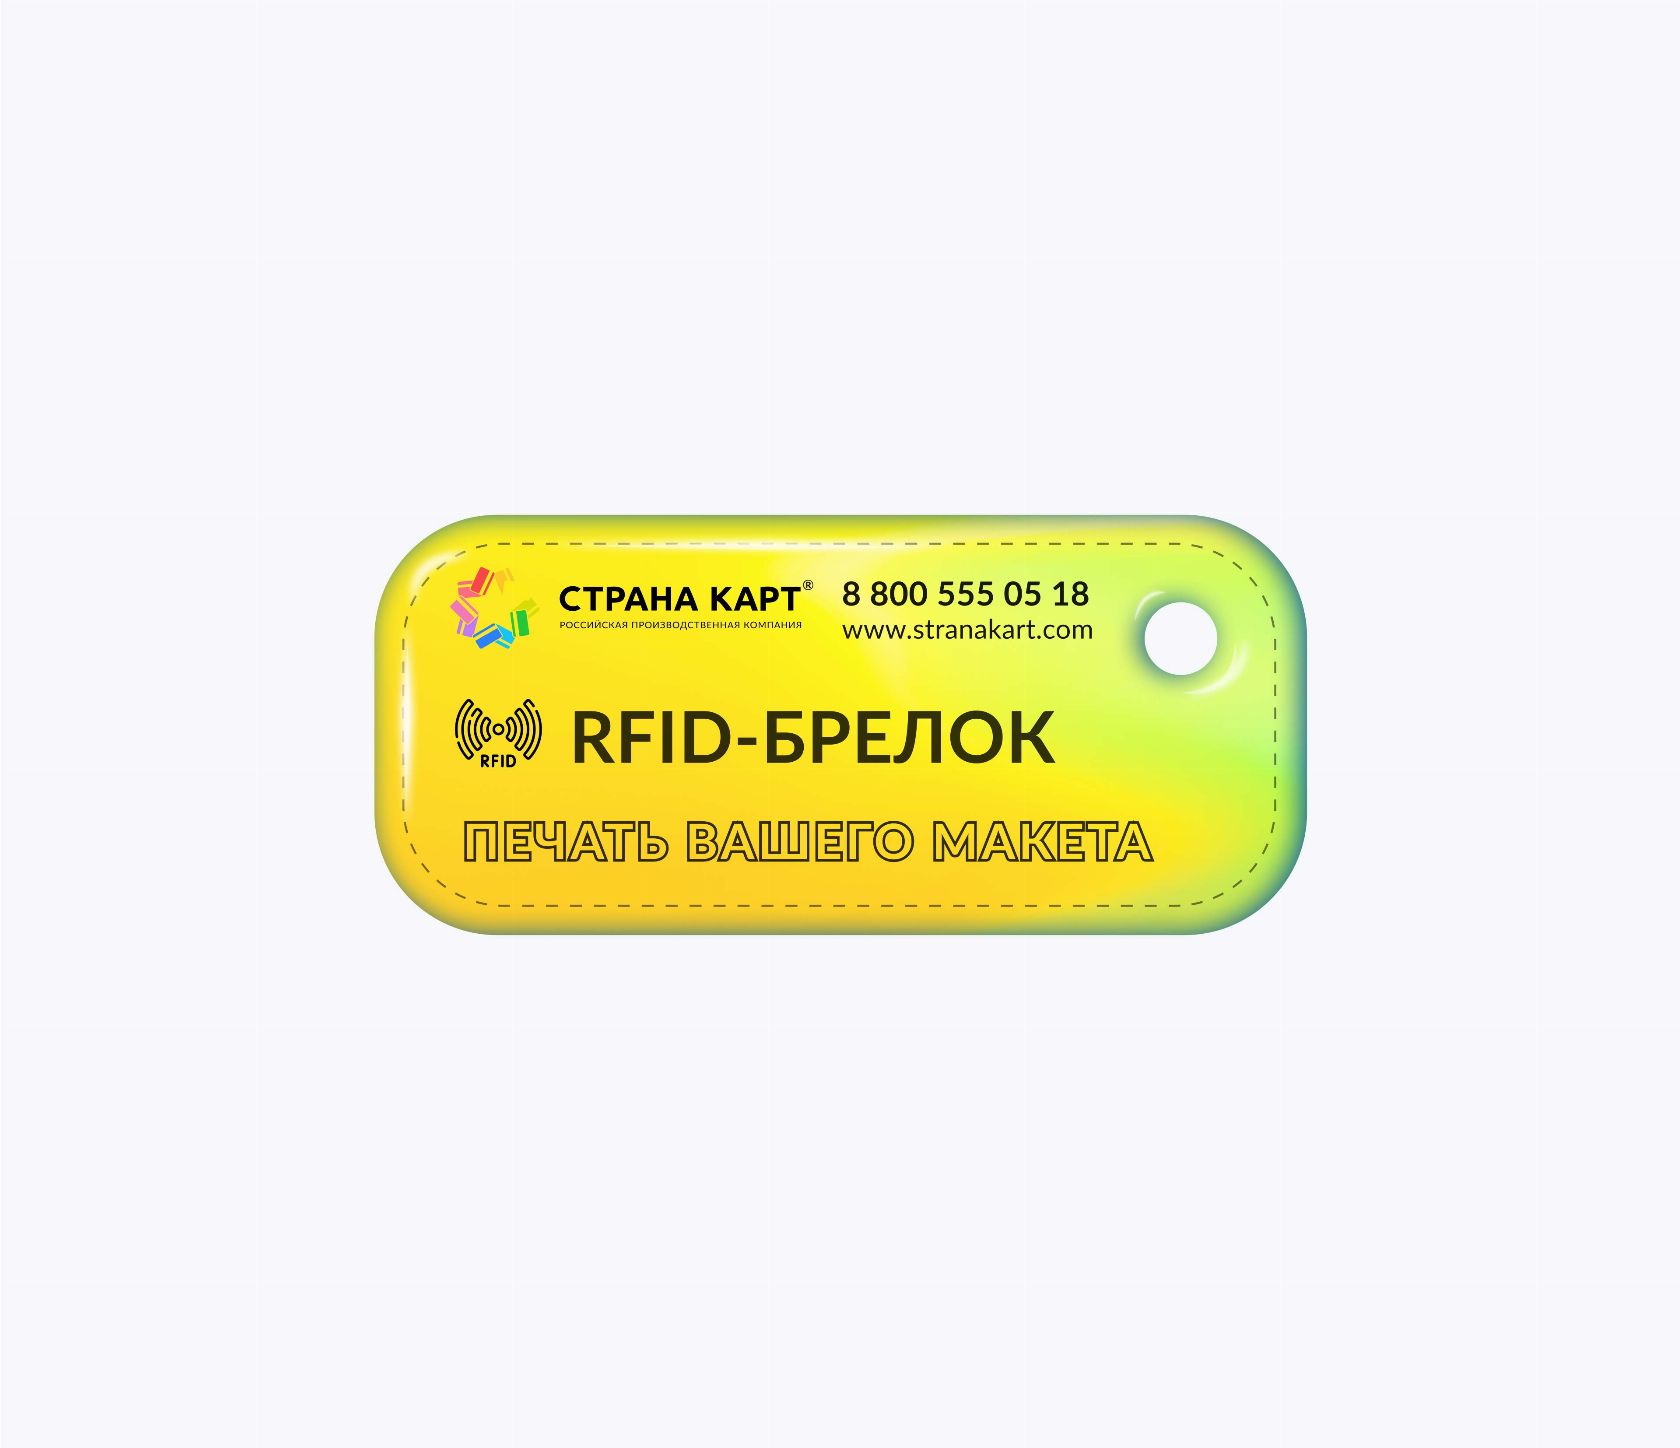 Прямоугольные мини RFID-брелоки NEOKEY® с чипом NXP NFC NTAG 215 RFID-брелоки NEOKEY® с чипом NXP NFC NTAG 215 и вашим логотипом